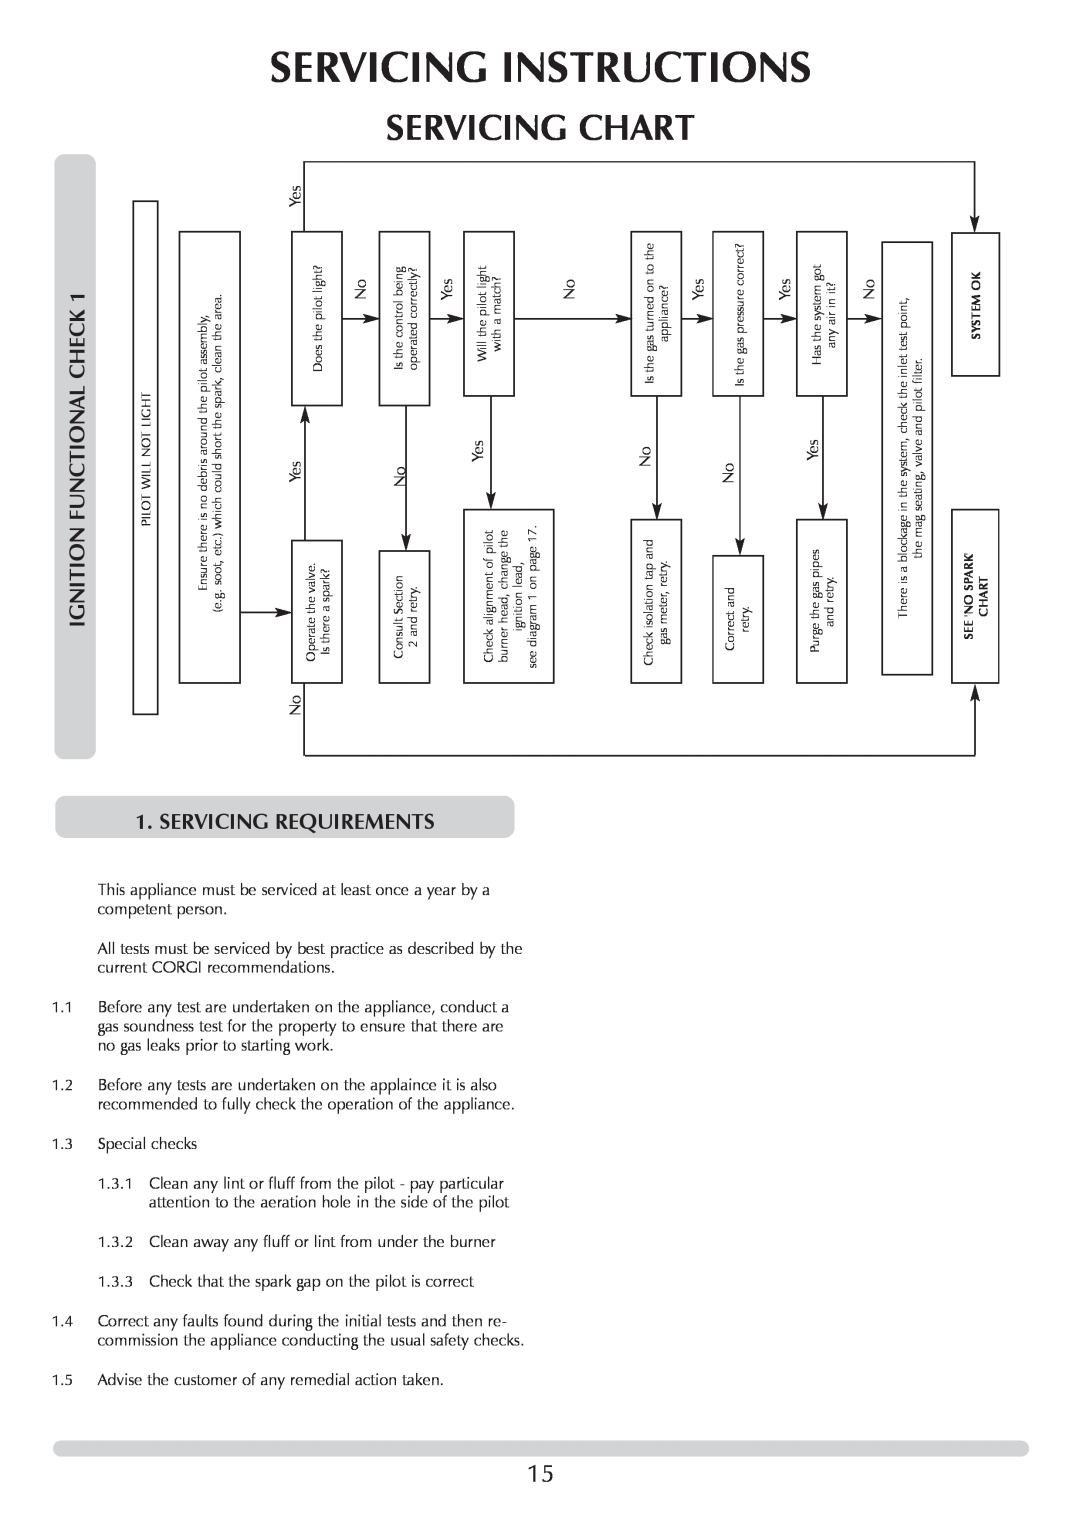 Stovax F40 manual Servicing Chart, Check, Servicing Requirements, Servicing Instructions 